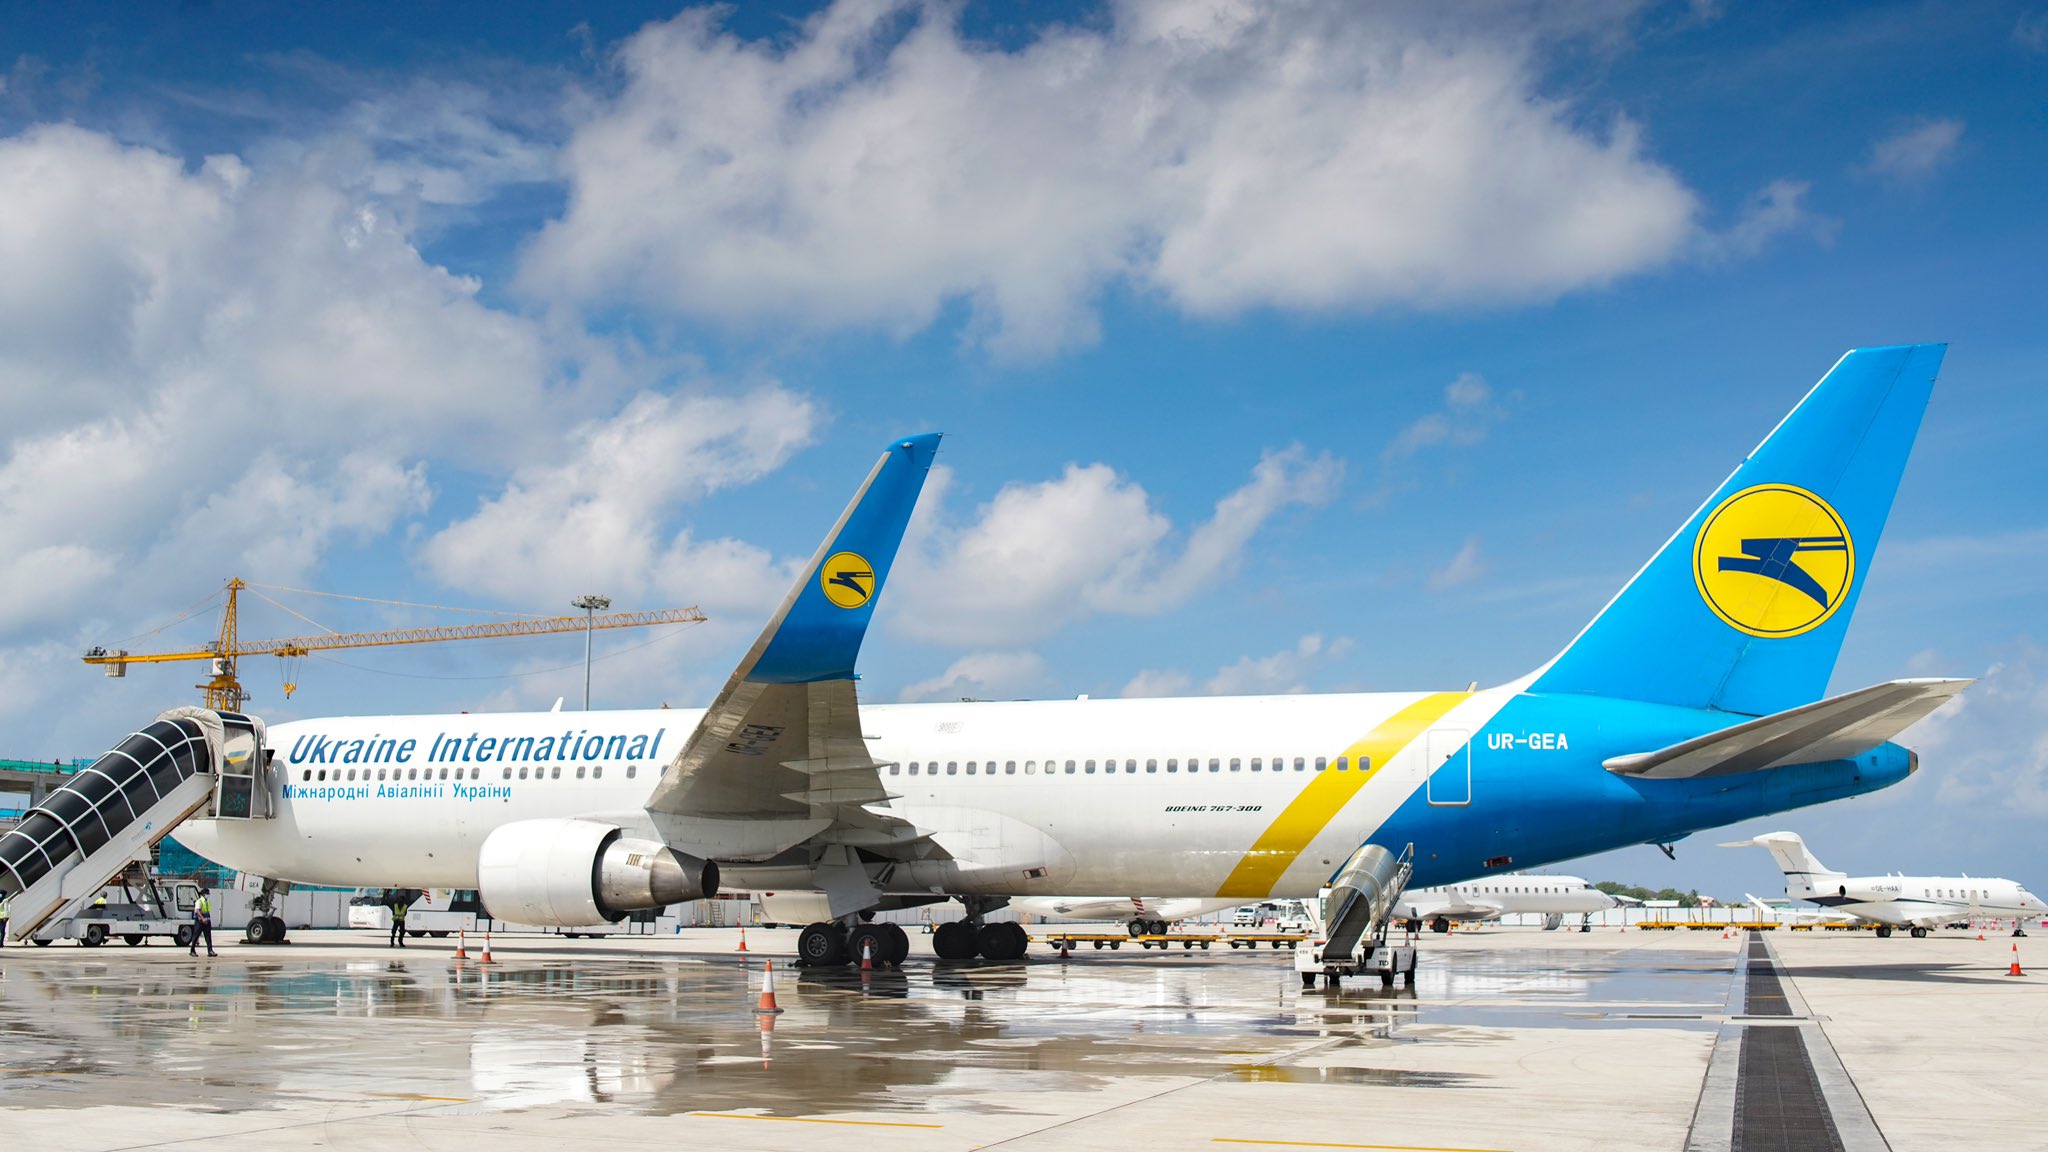 Ukraine International Airline arrived at the Velana International Airport. Photo: VIA.